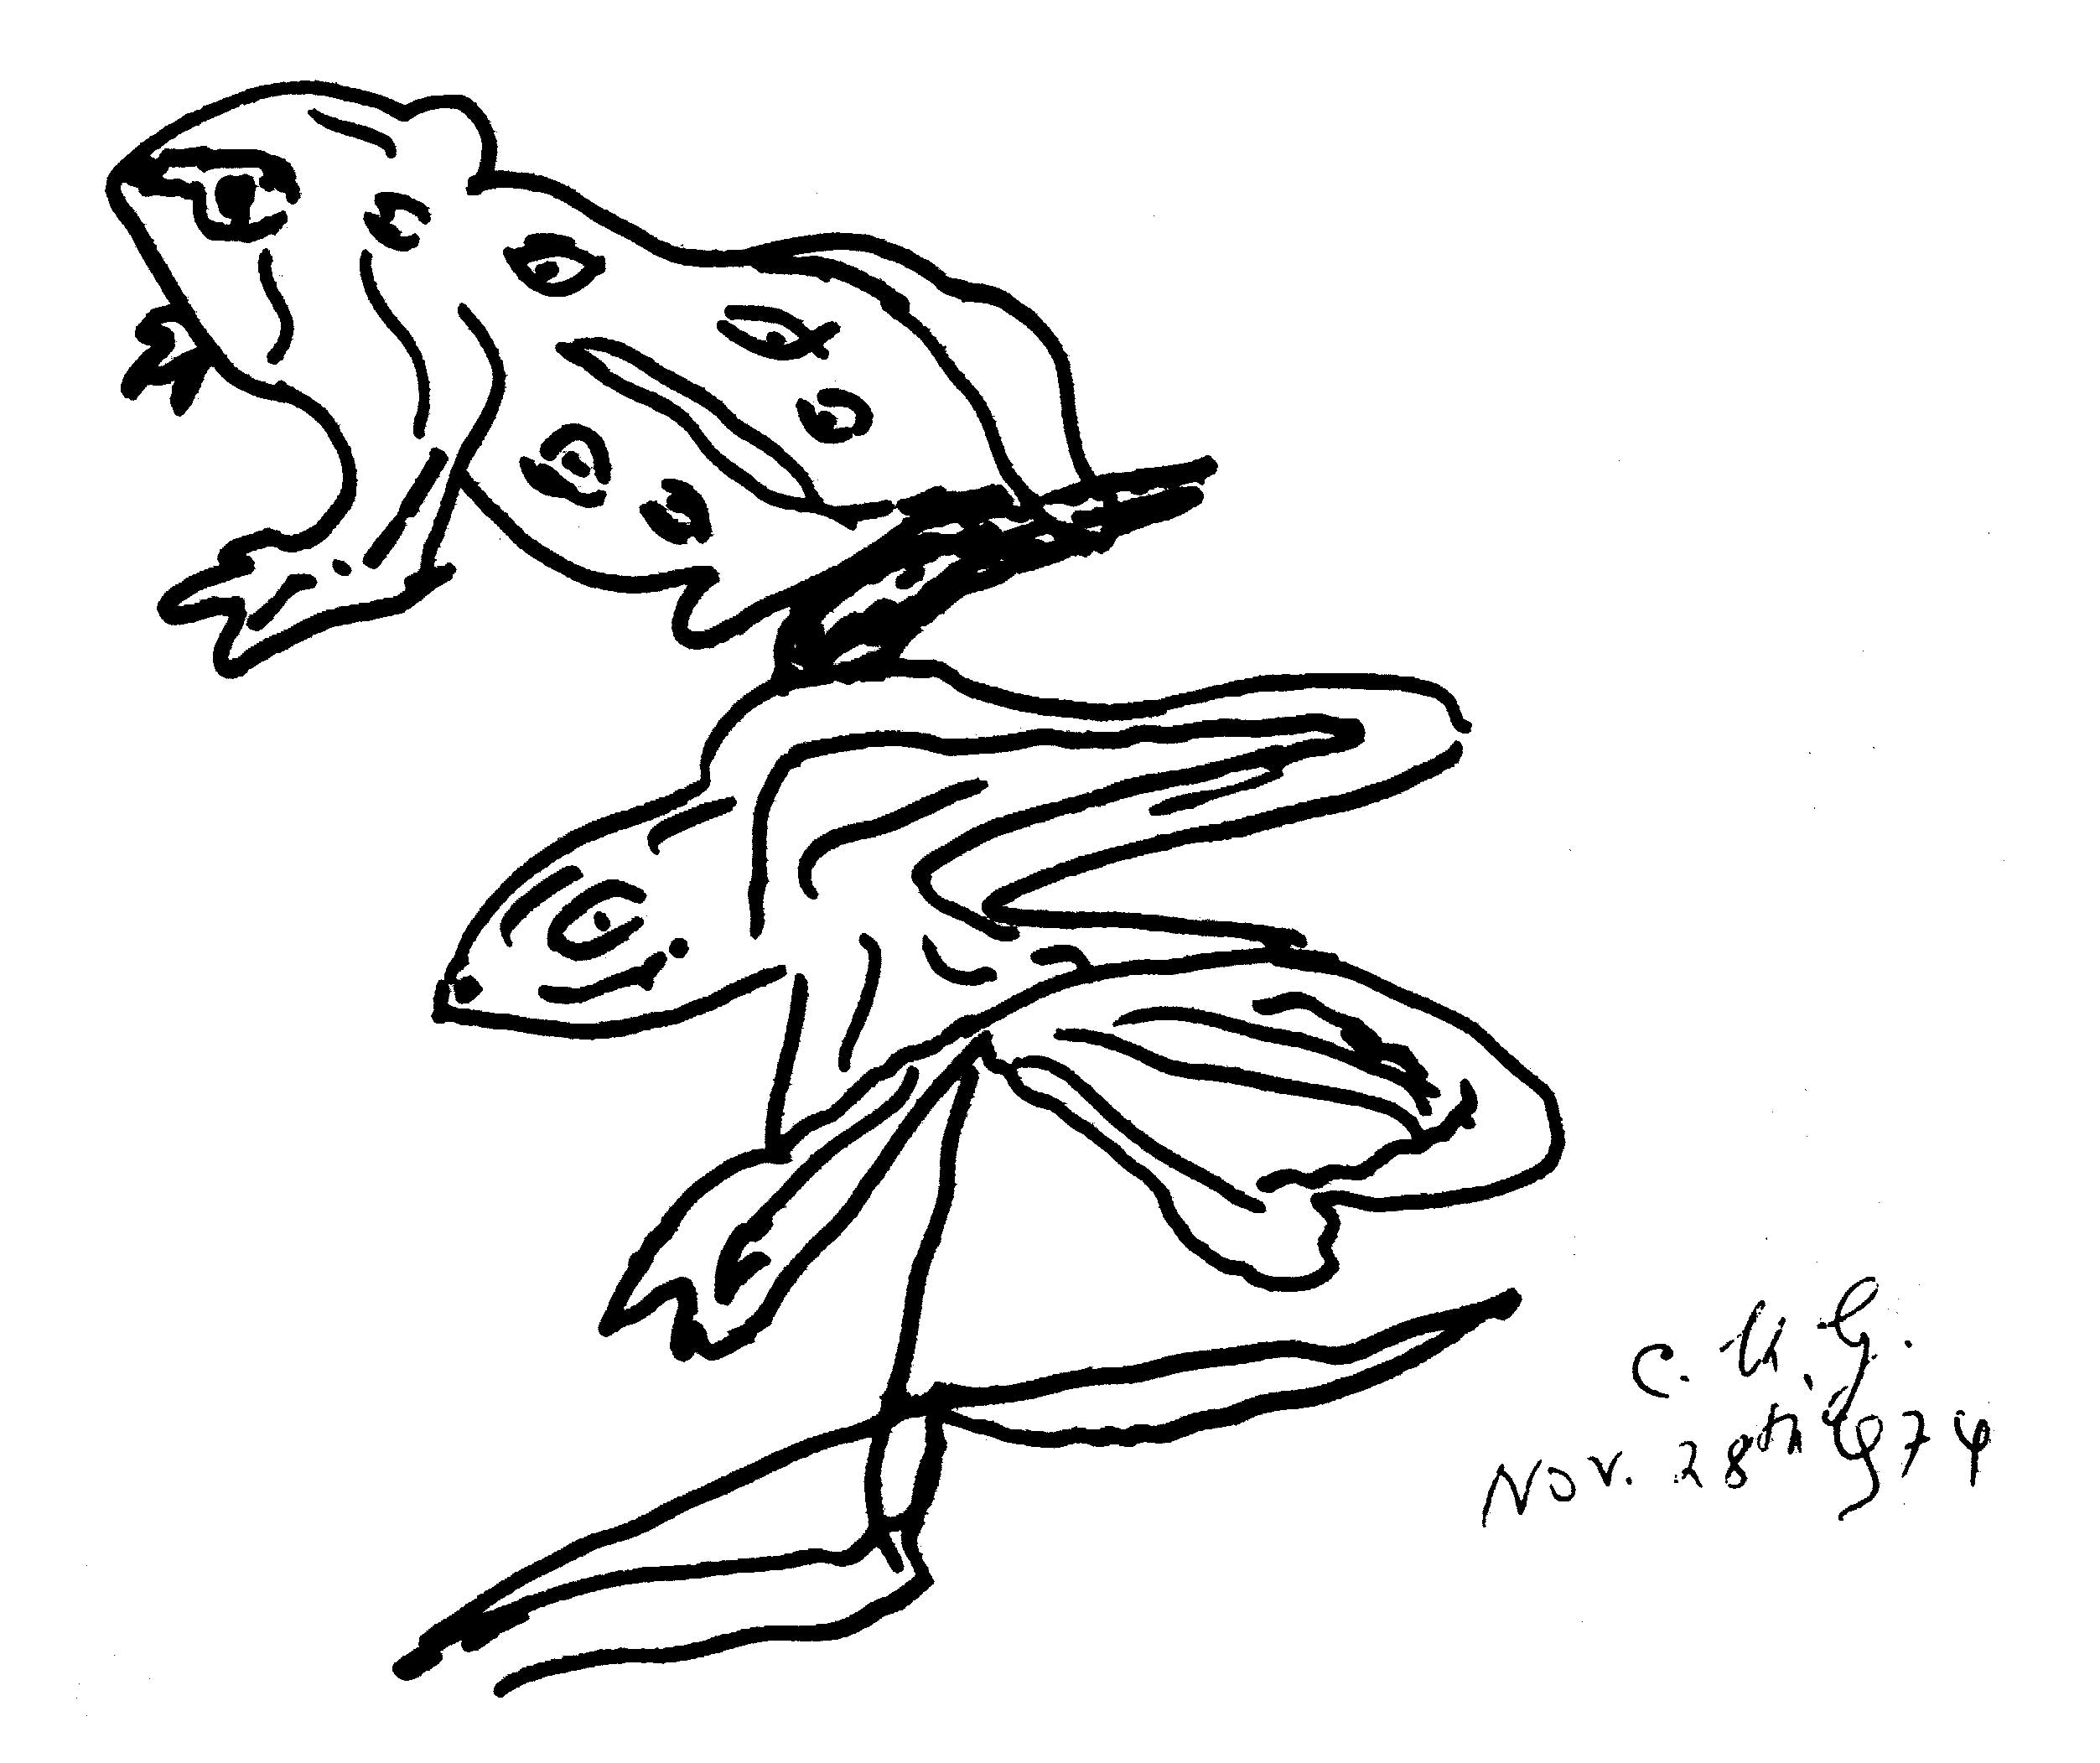 frogs-by-ckg